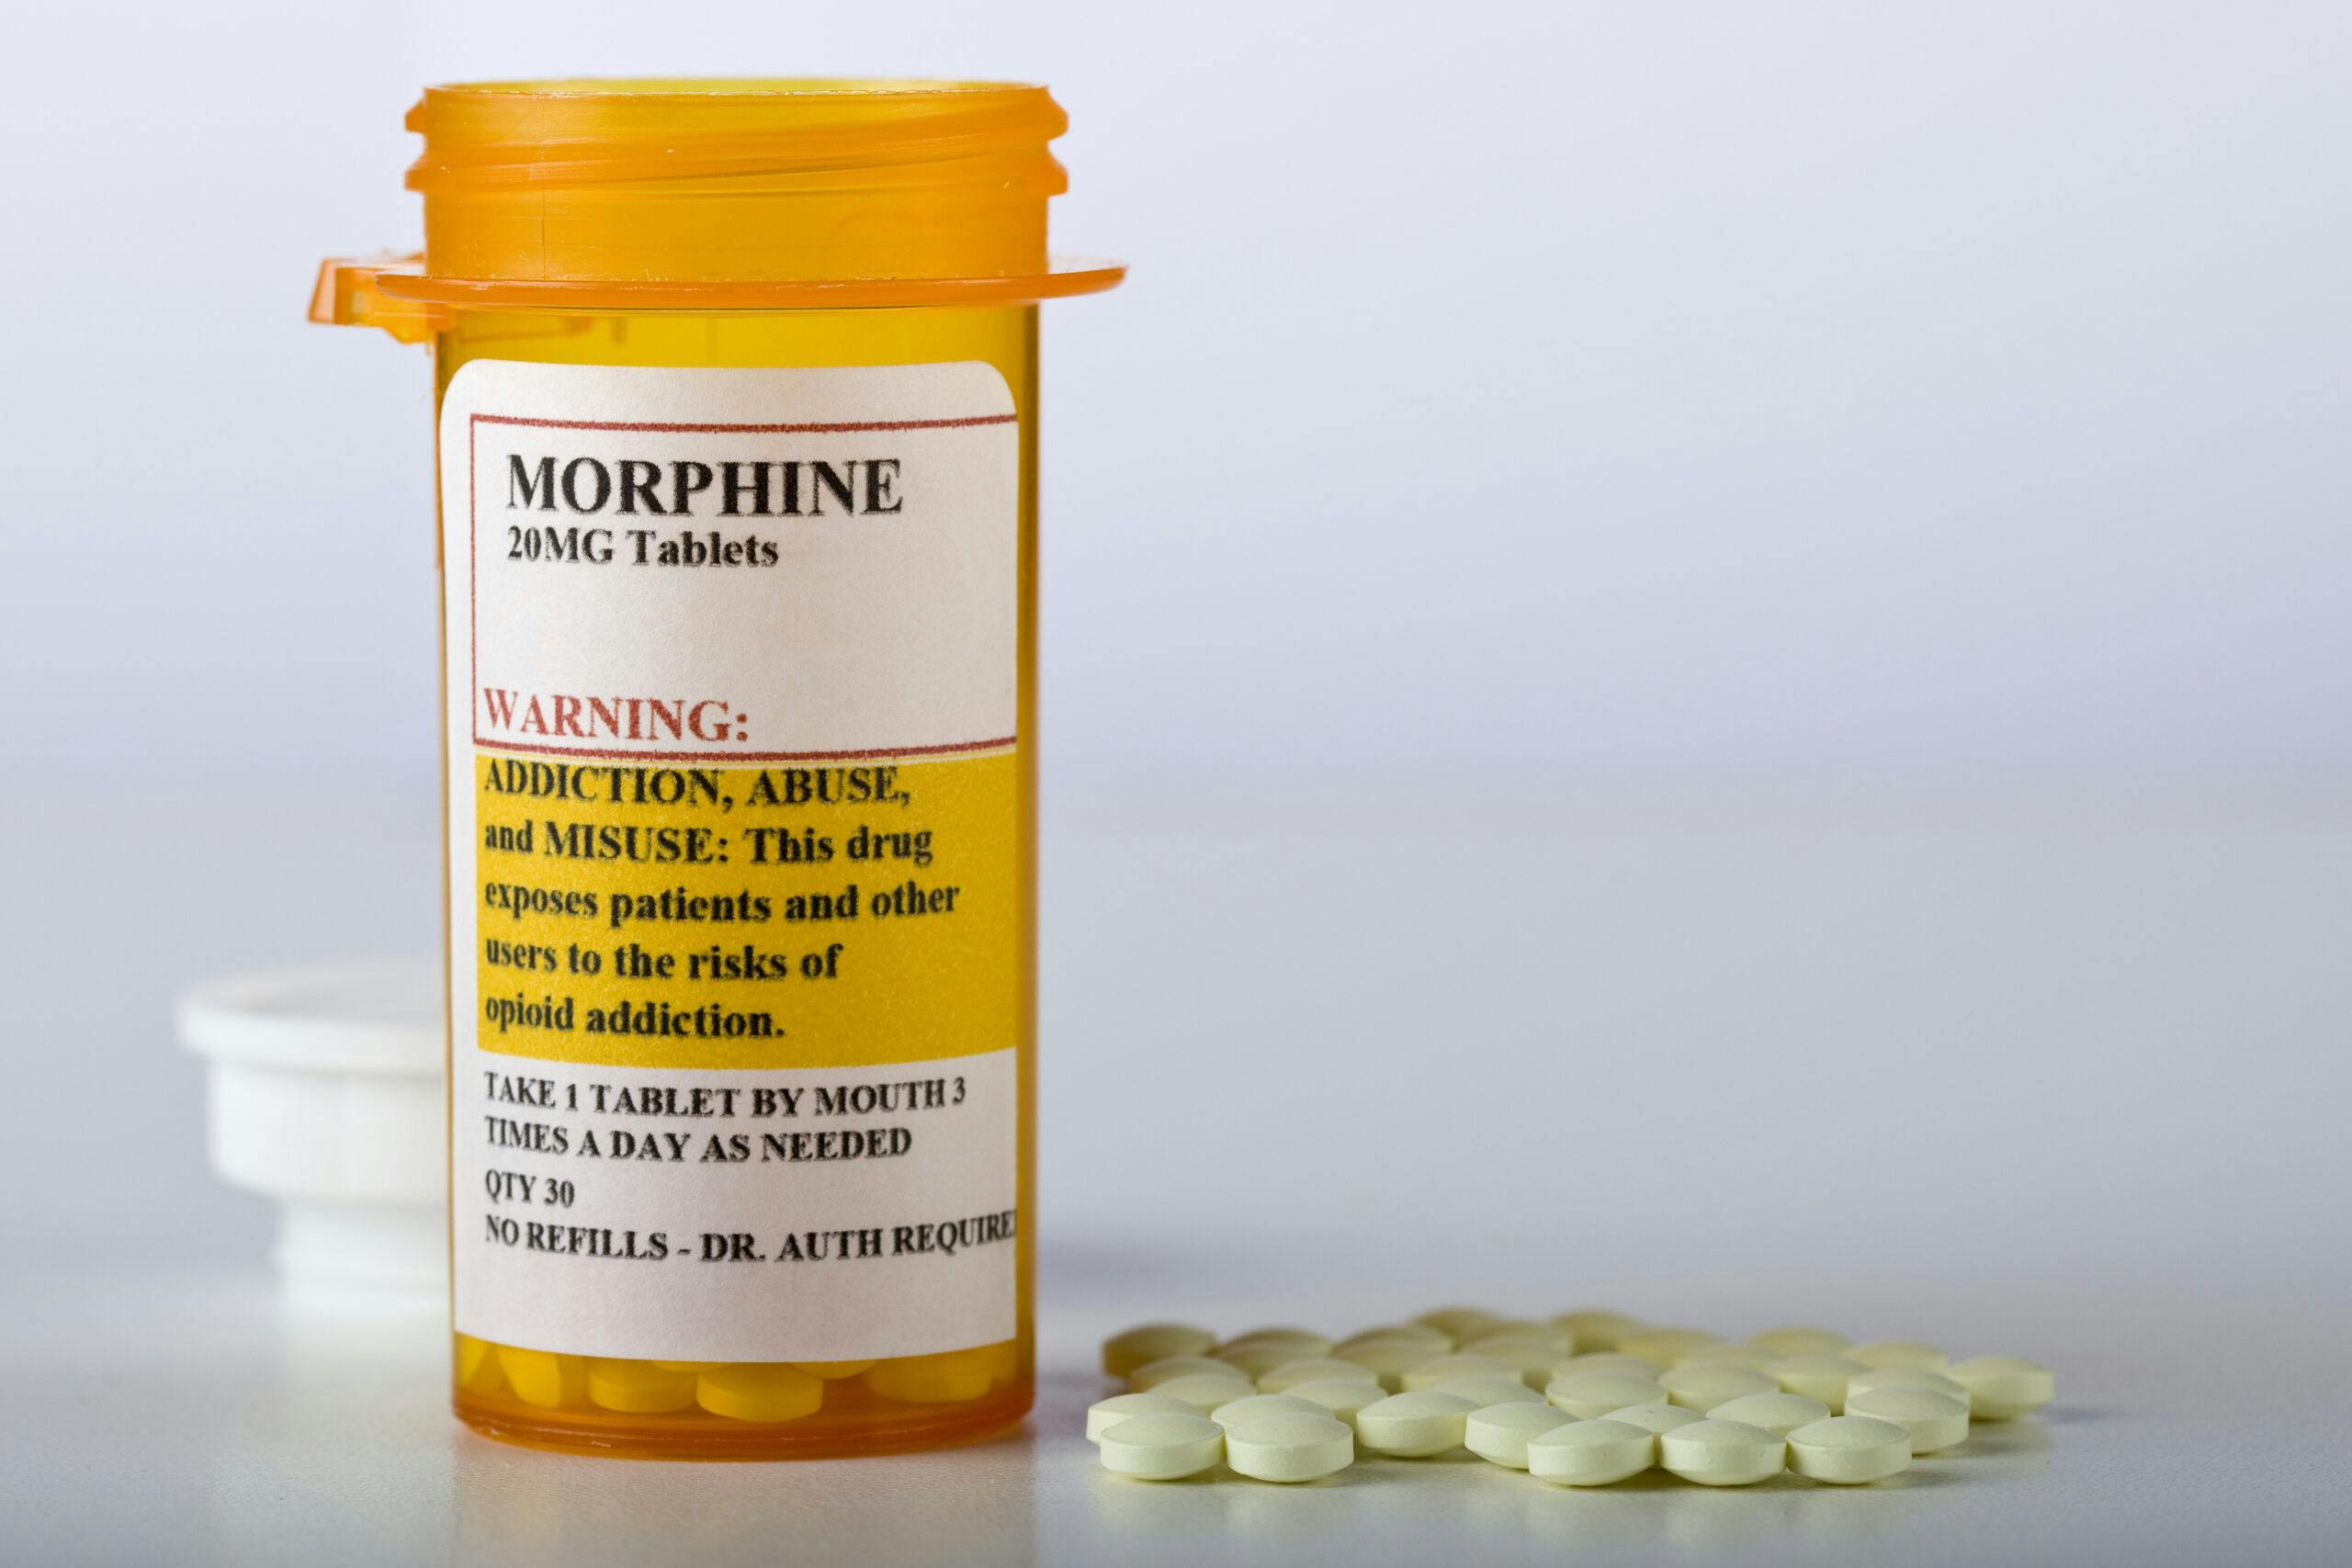 morphine bottle and pills